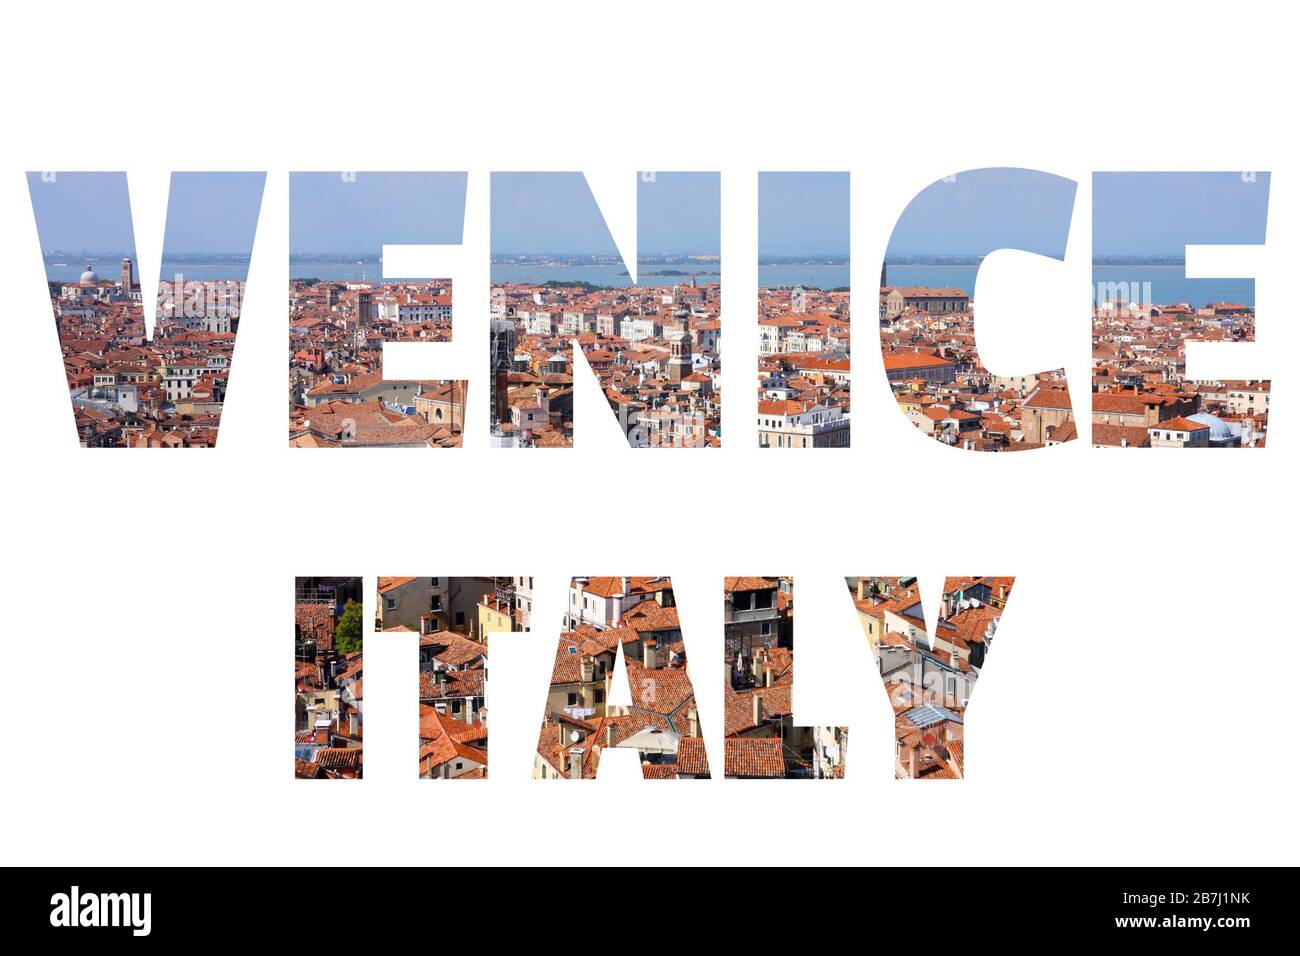 Venice, Italy - word text travel destination postcard. Stock Photo